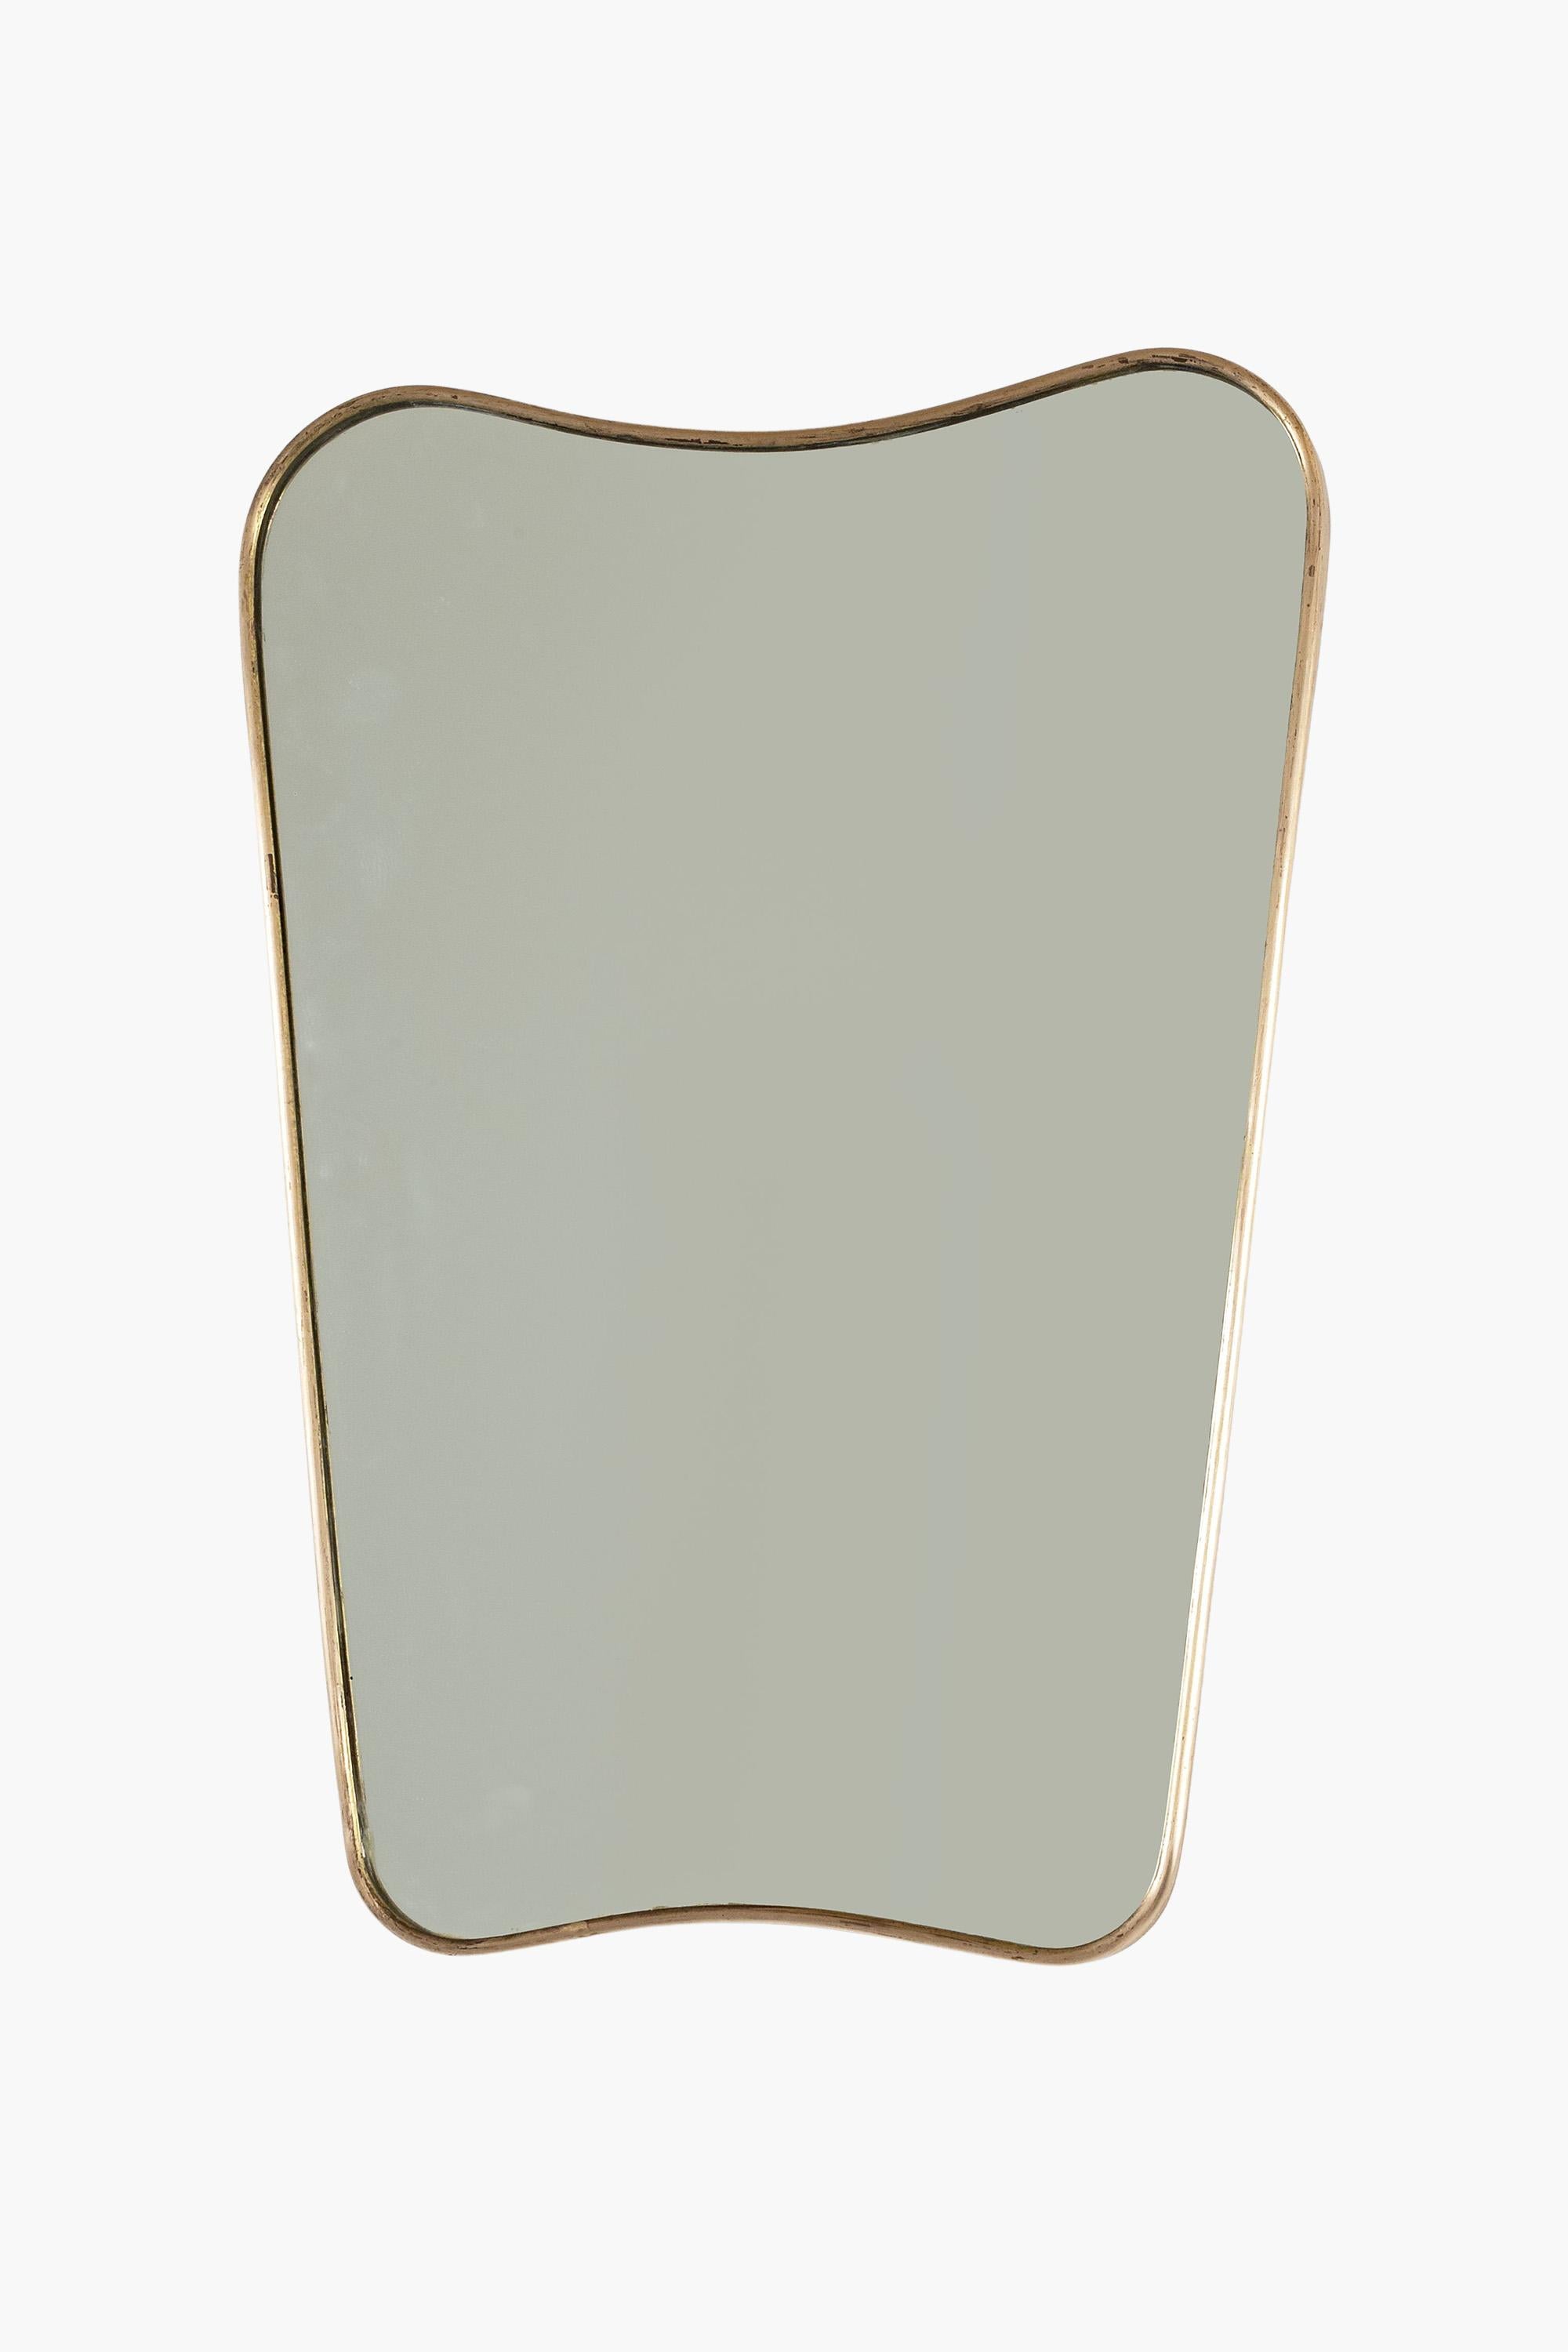 Mid-Century Modern 1950s Italian Gio Ponti Brass Framed Mirror  For Sale